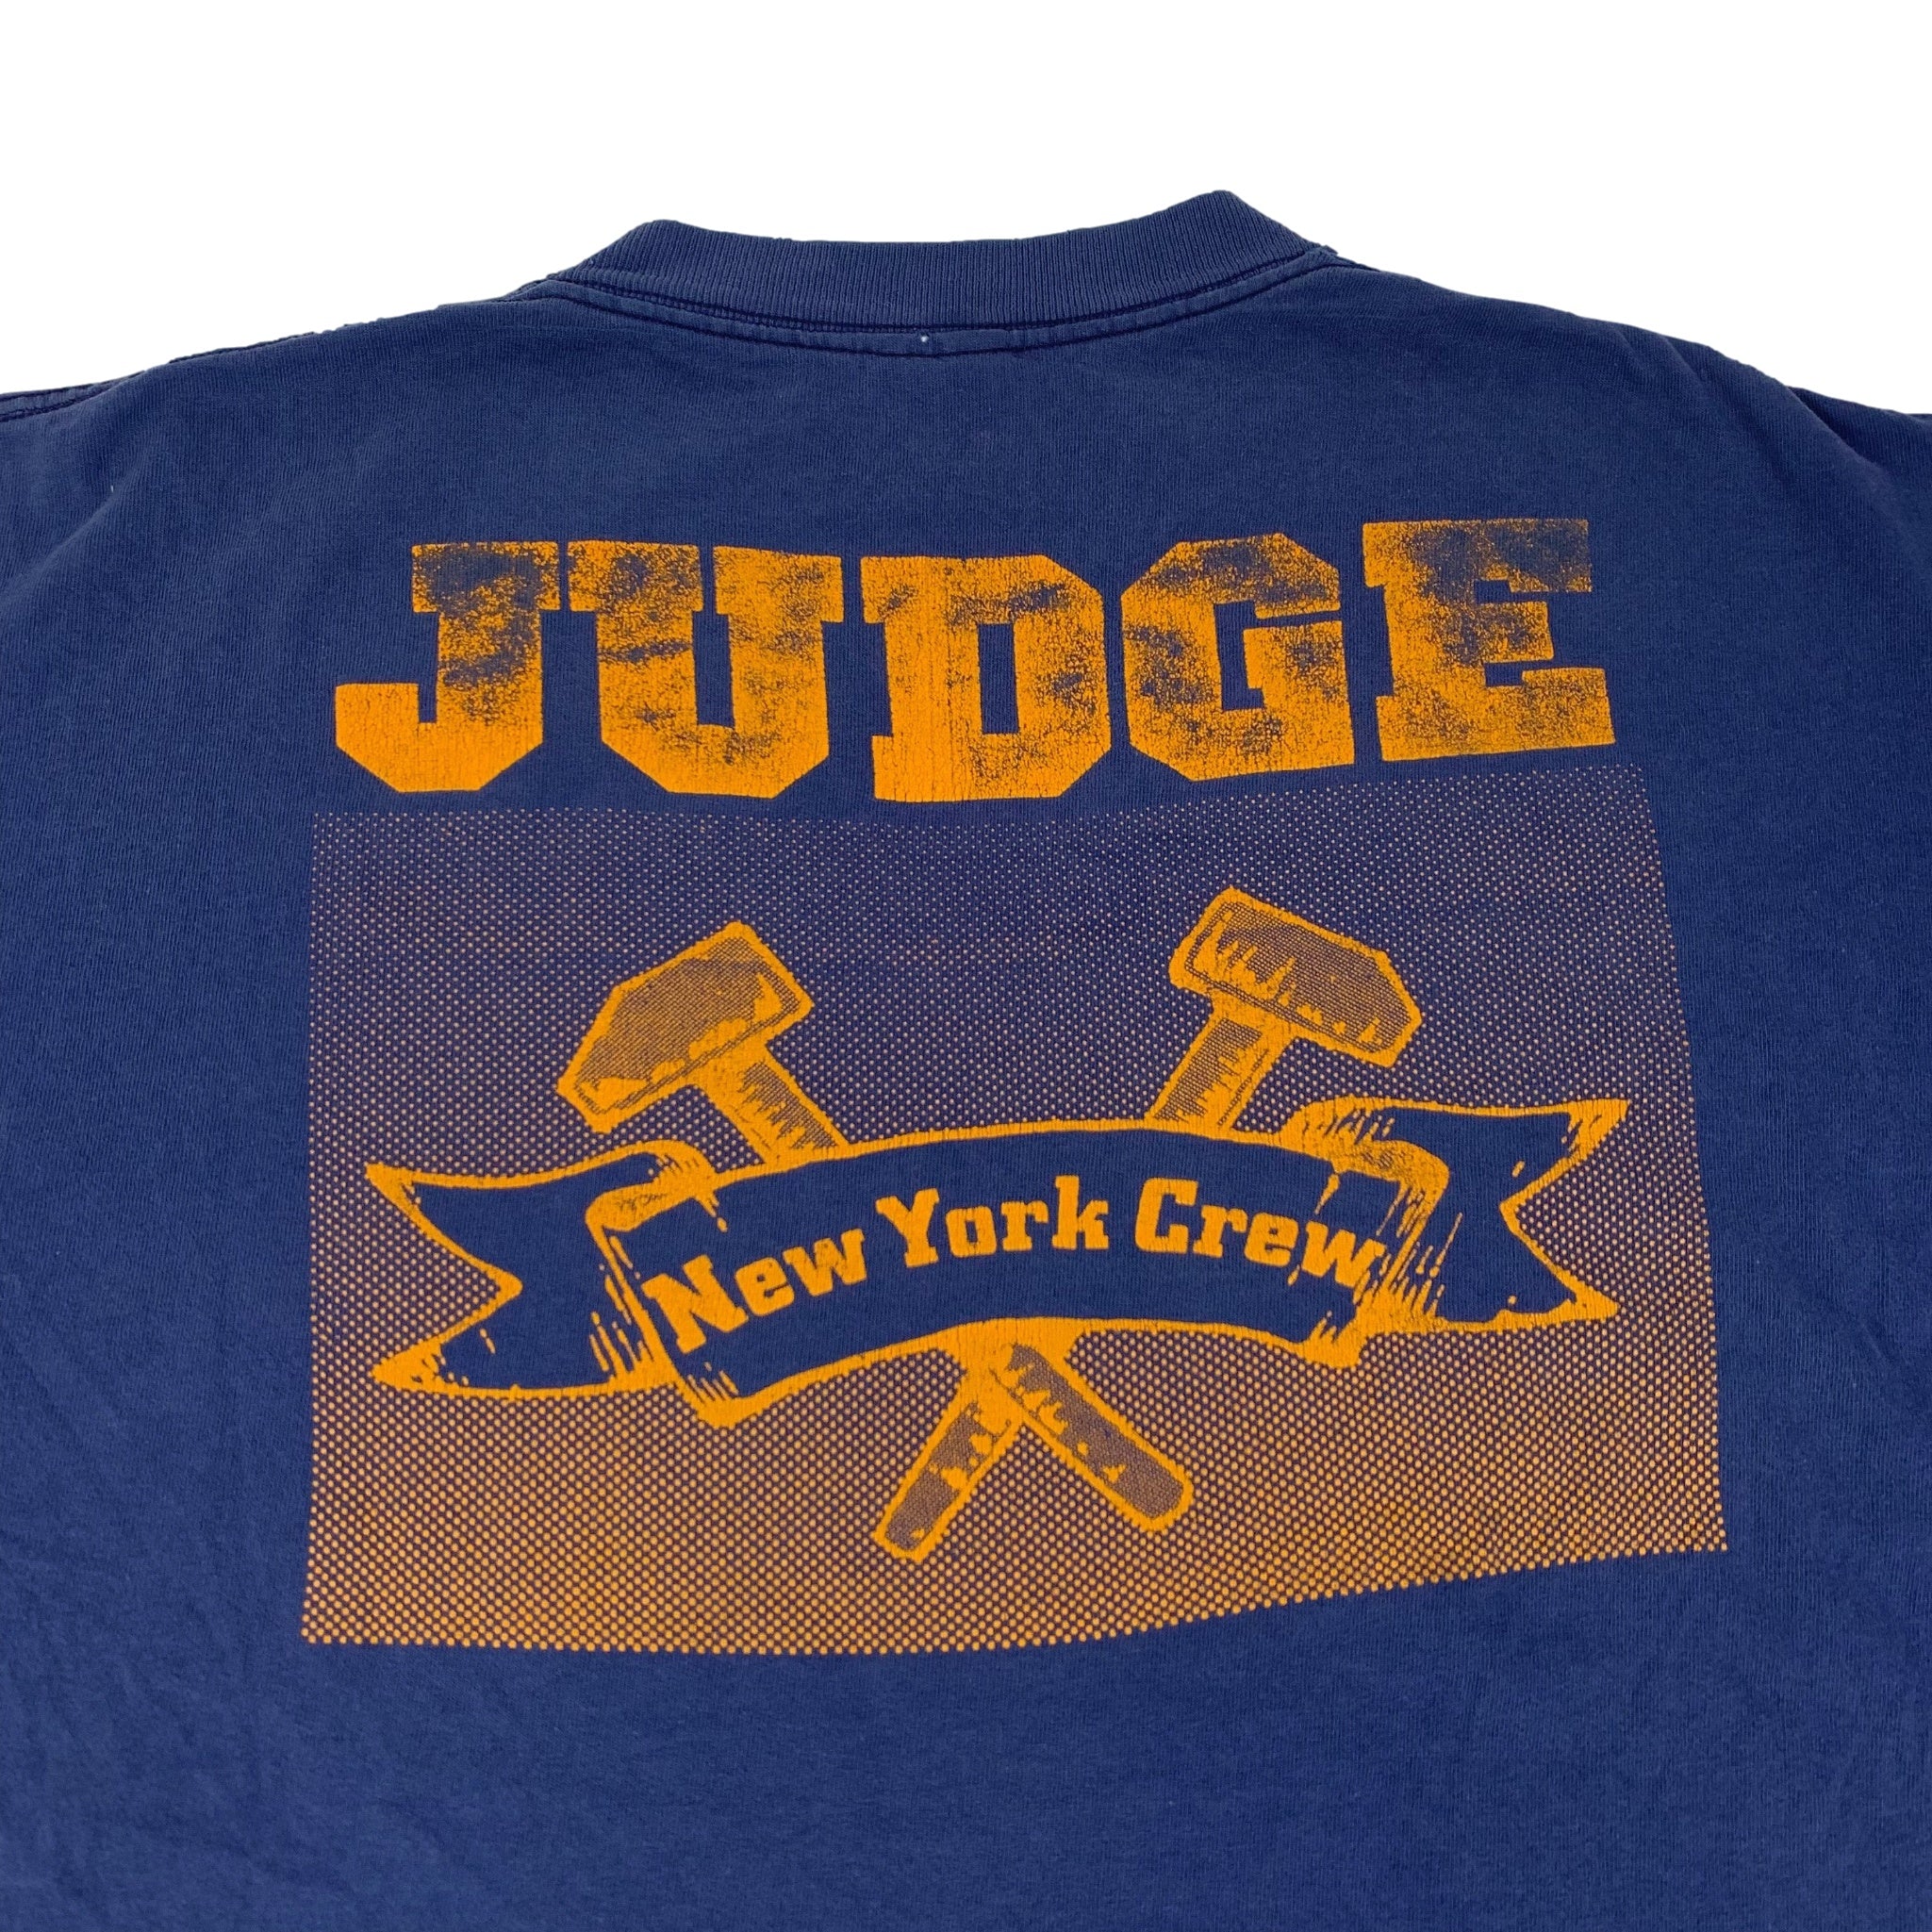 Vintage Judge New York Crew Schism Records Long Sleeve T-Shirt